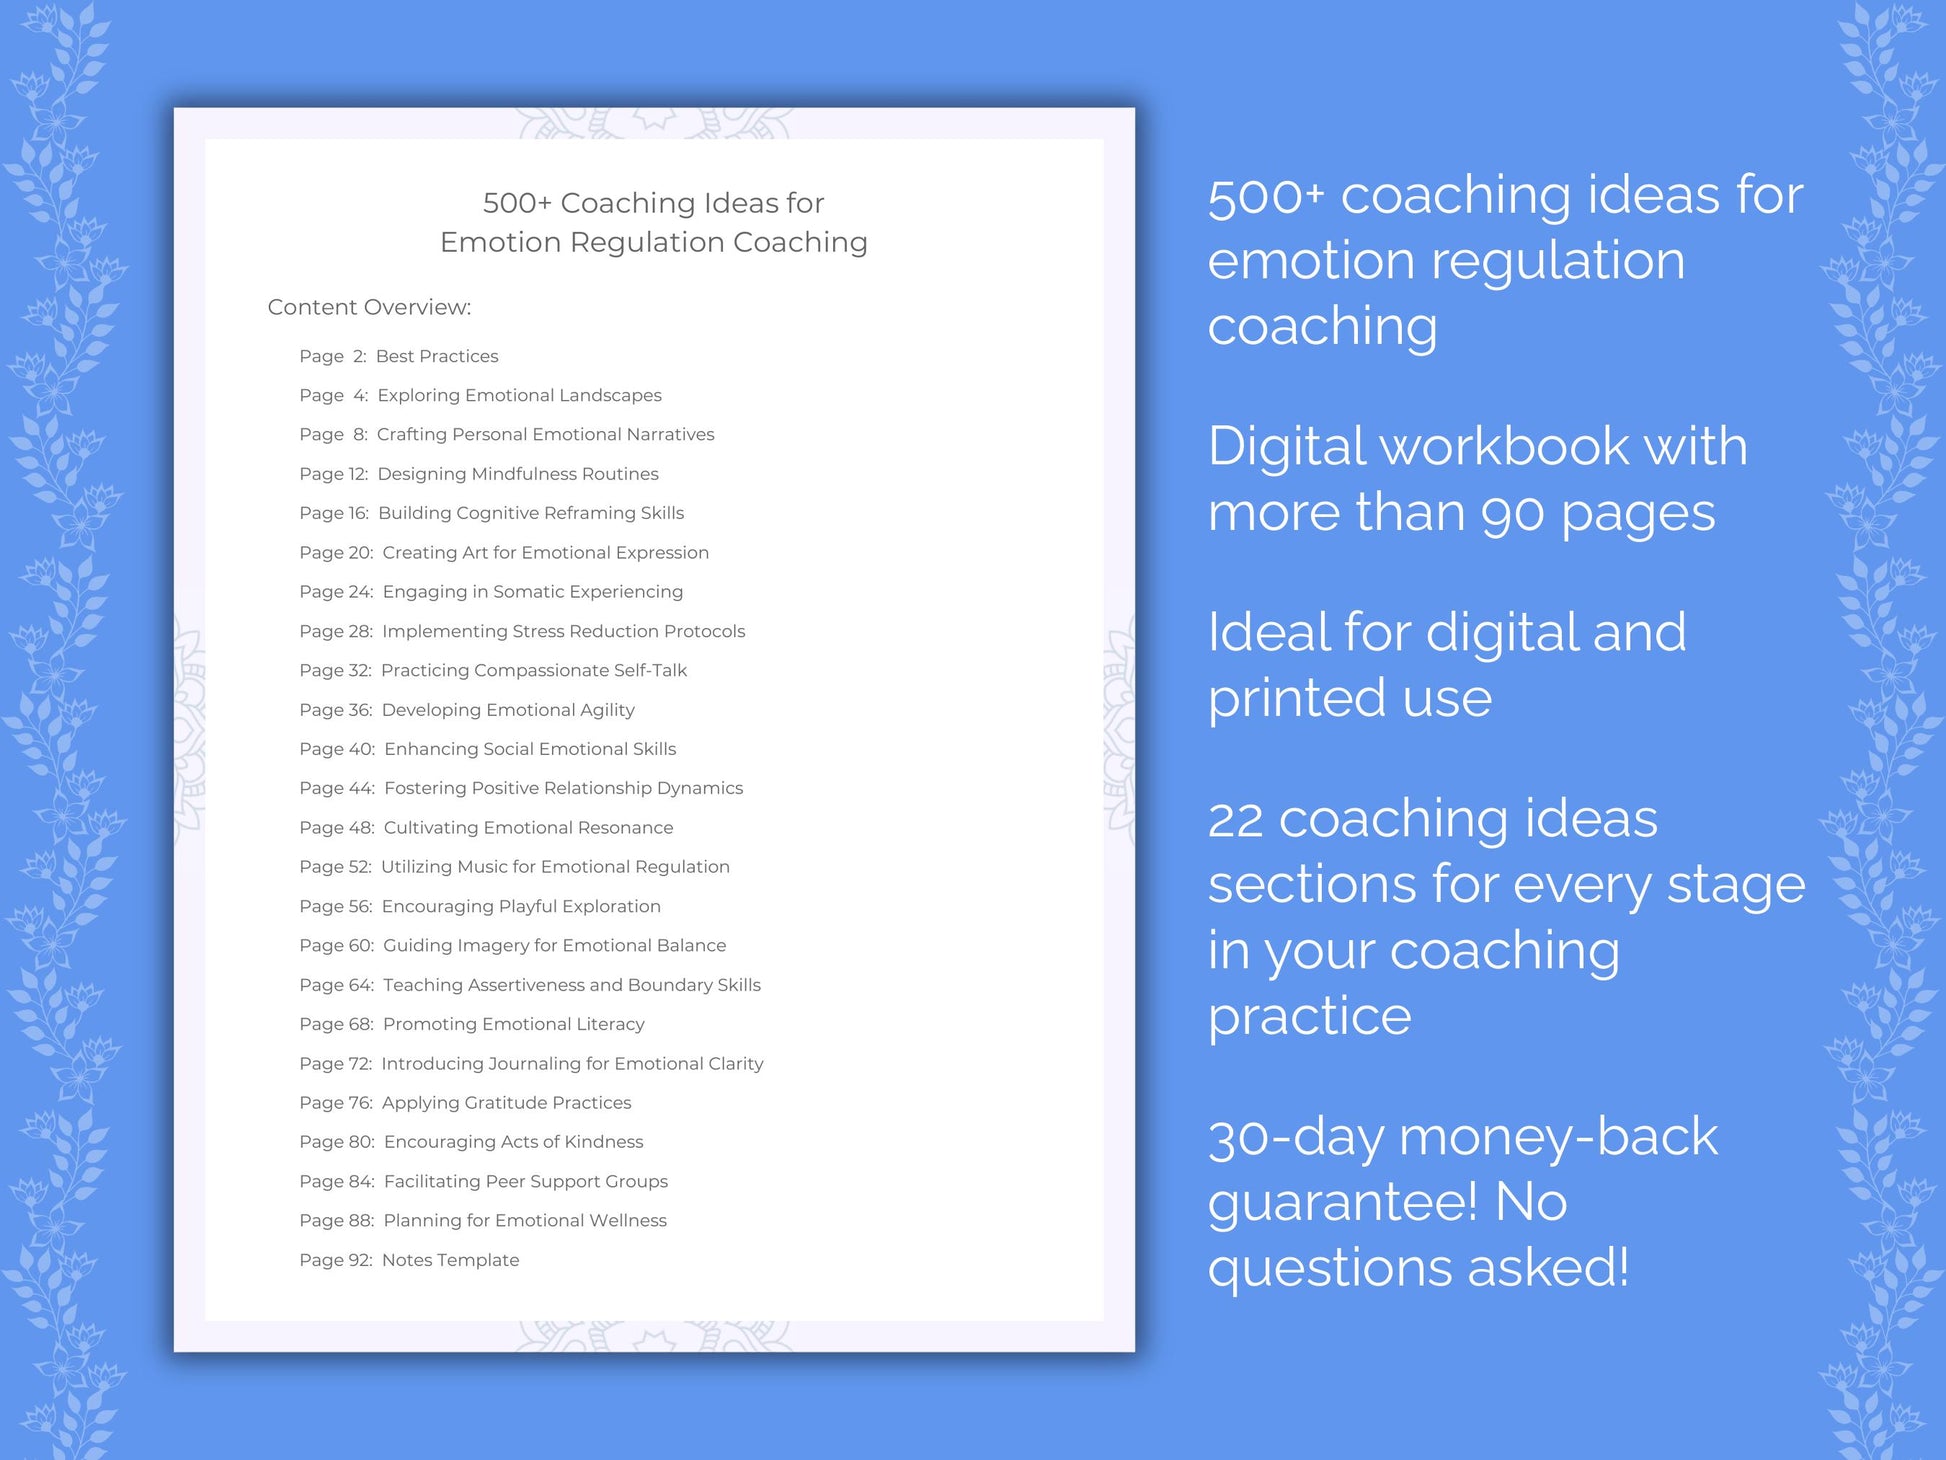 Emotion Regulation Coaching Ideas